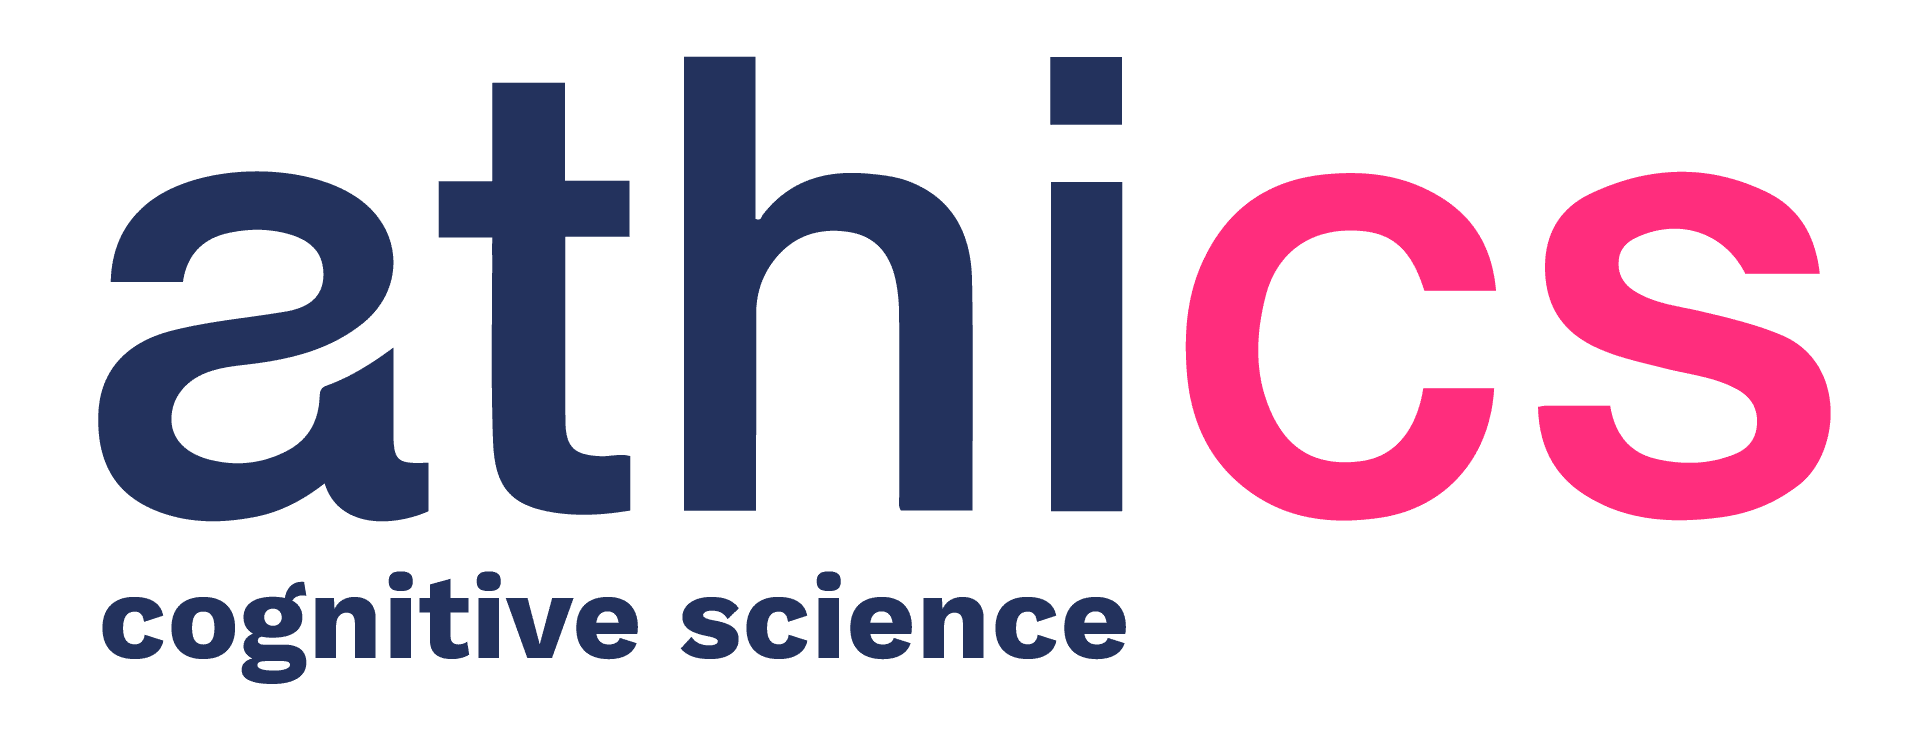 logo athics